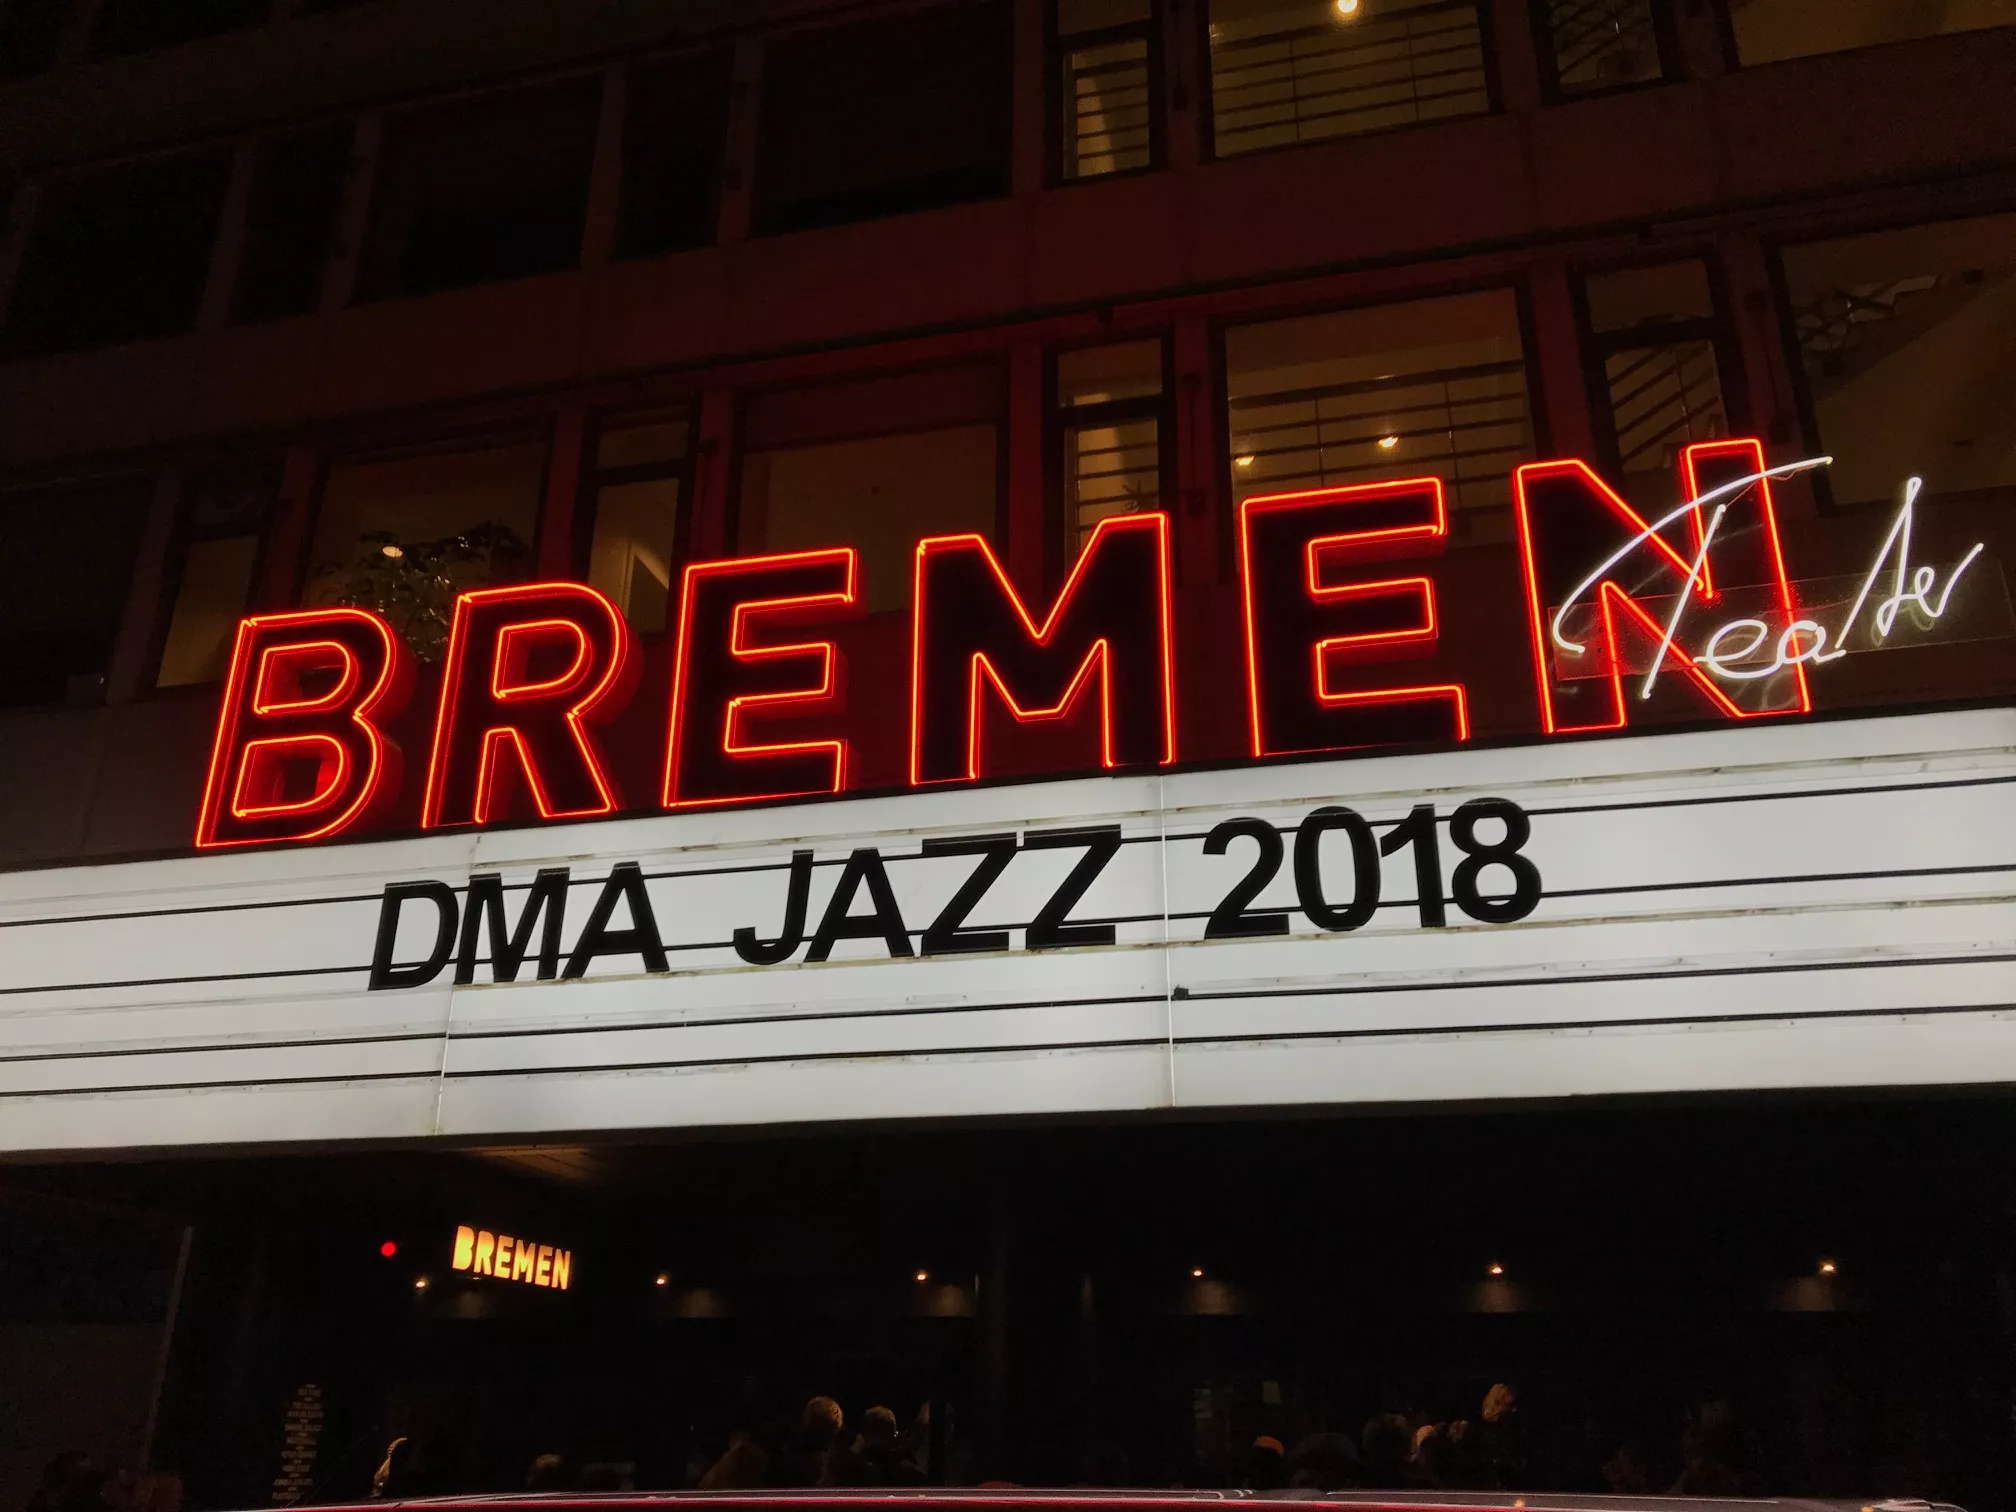 DMA Jazz 2018 - otte priser uddelt